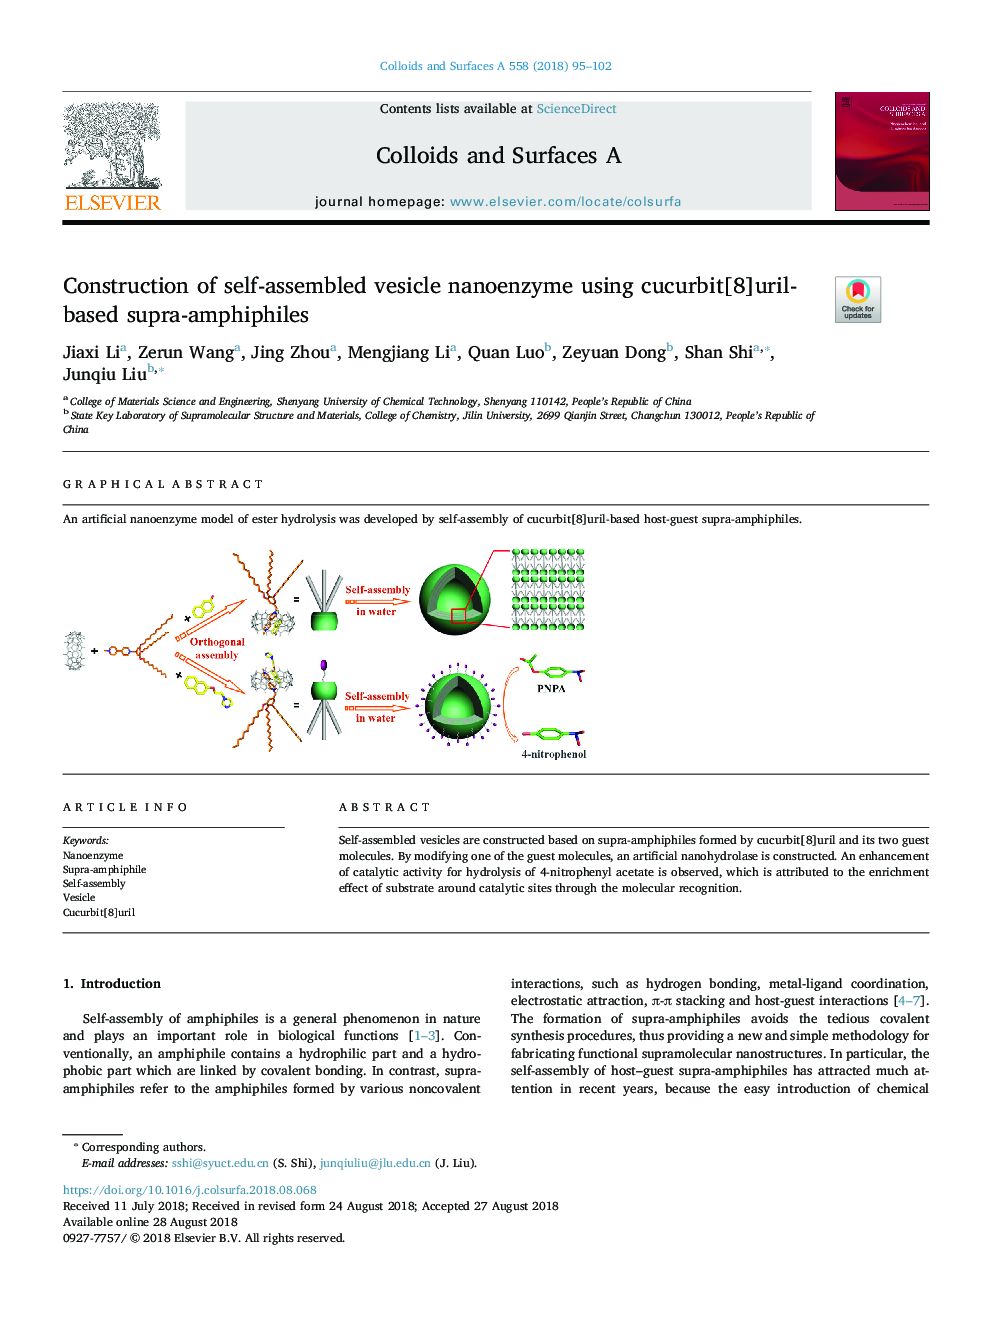 Construction of self-assembled vesicle nanoenzyme using cucurbit[8]uril-based supra-amphiphiles